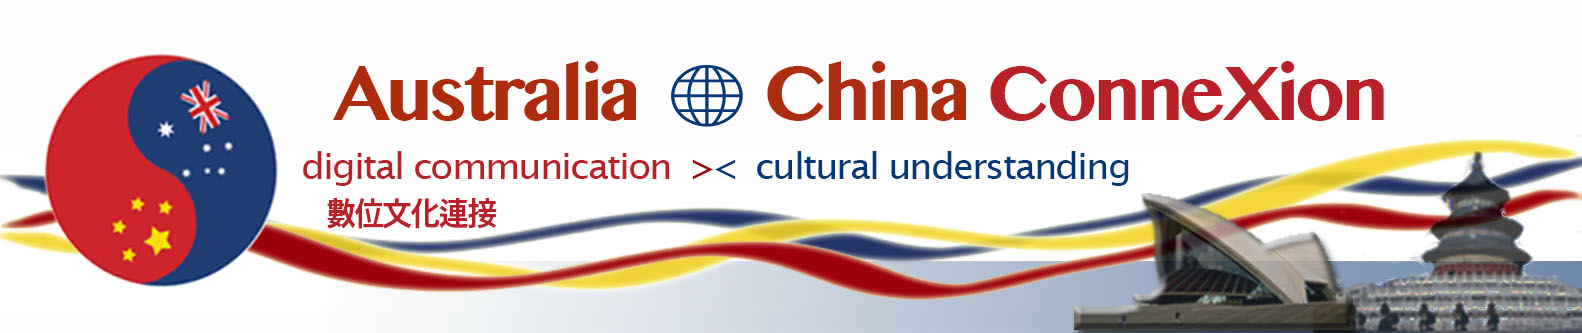 Australia - China ConneXion